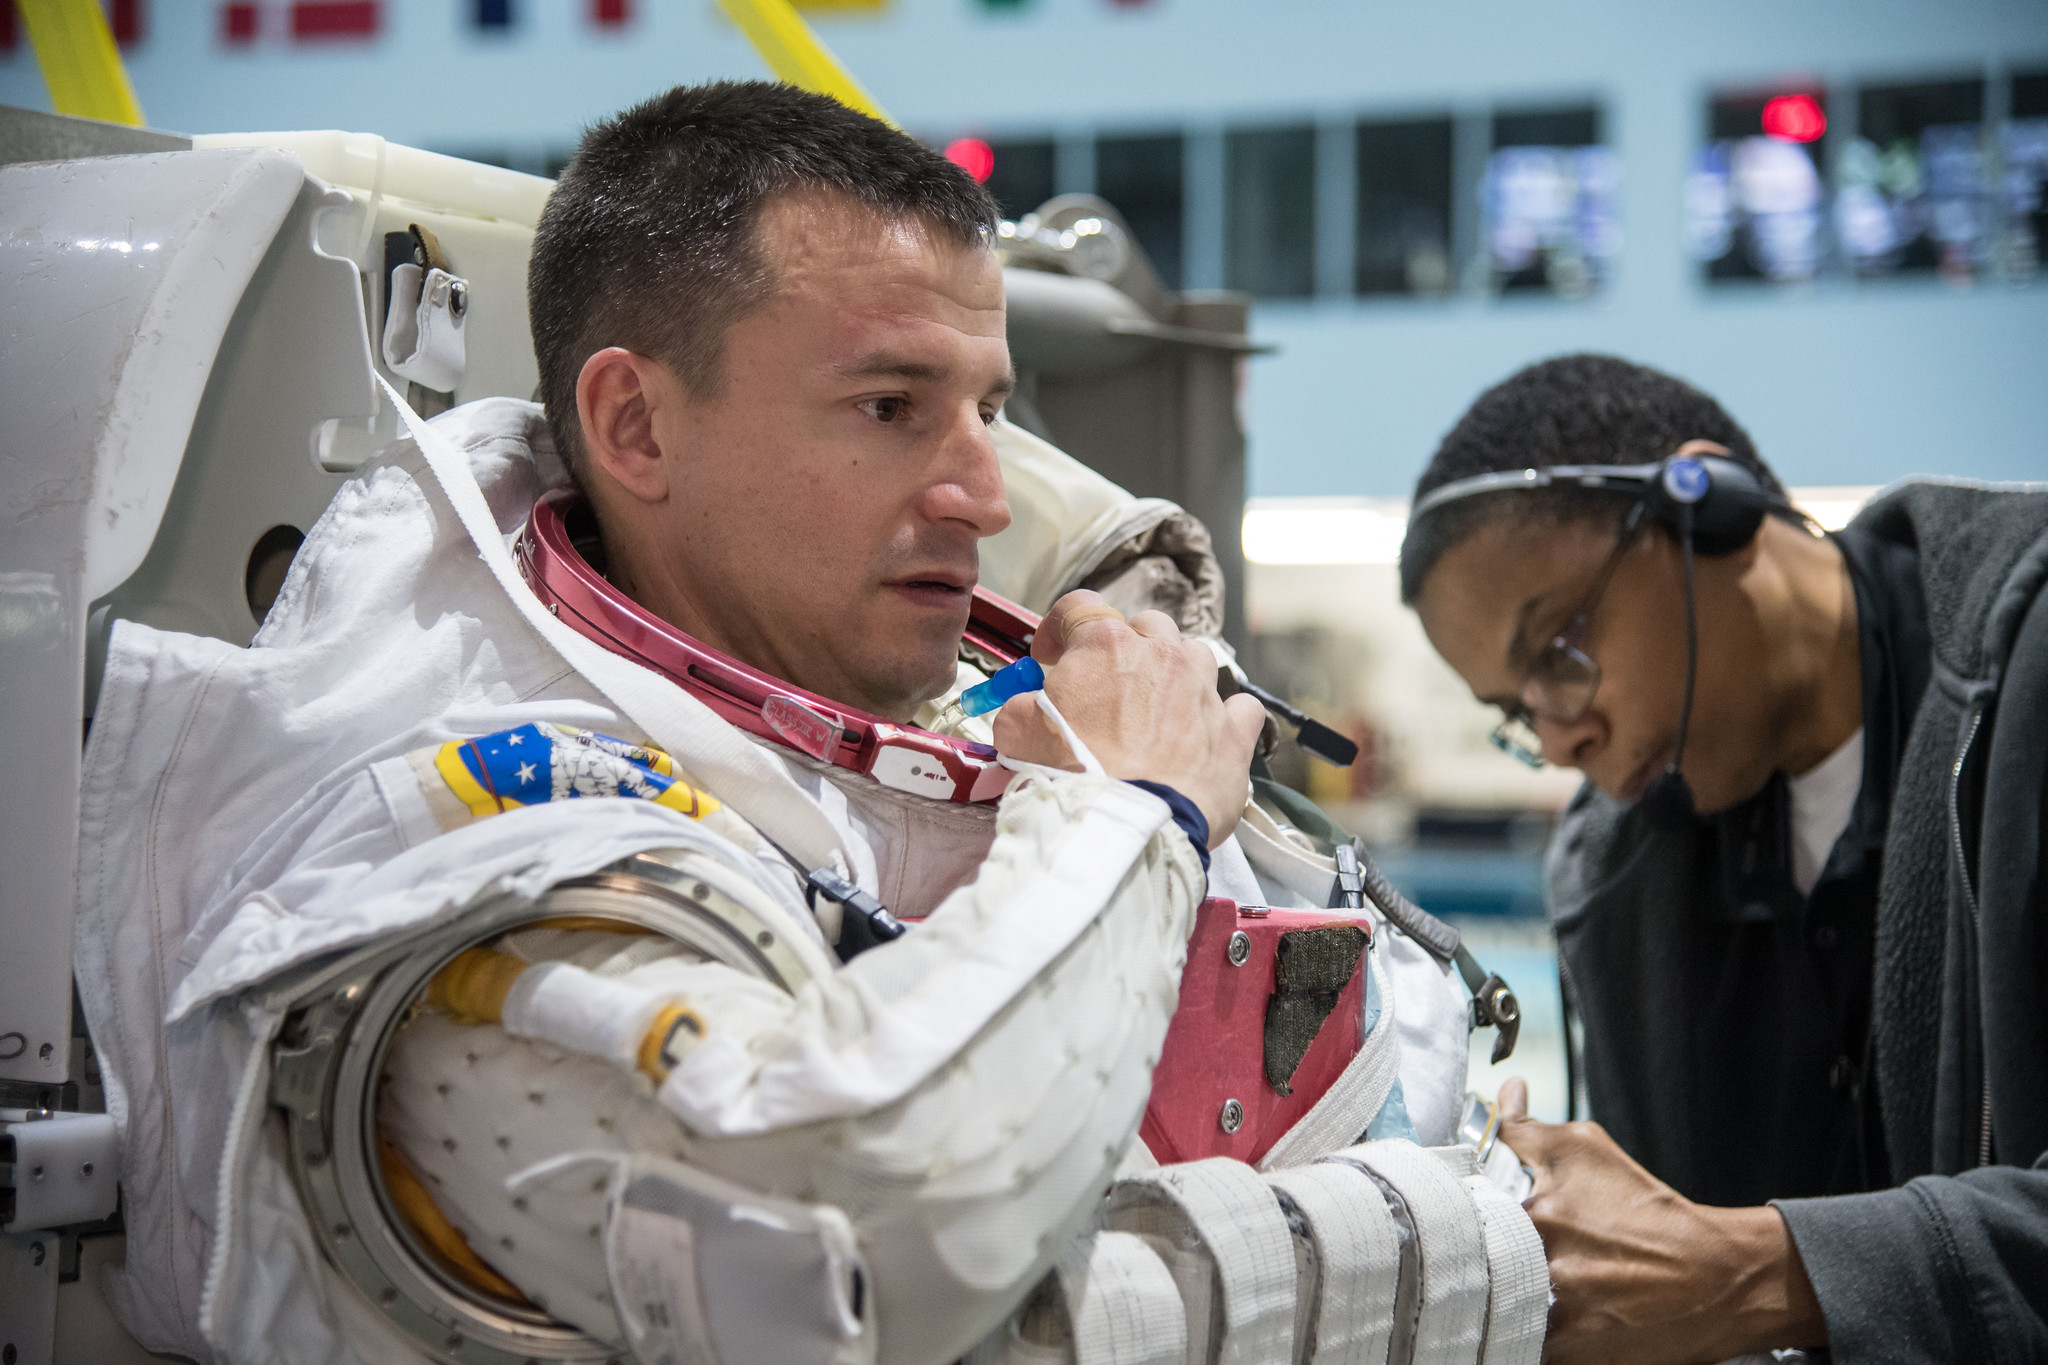 NASA astronaut Drew Morgan prepares for spacewalk training Jan. 24, 2018, in the Neutral Buoyancy Laboratory.